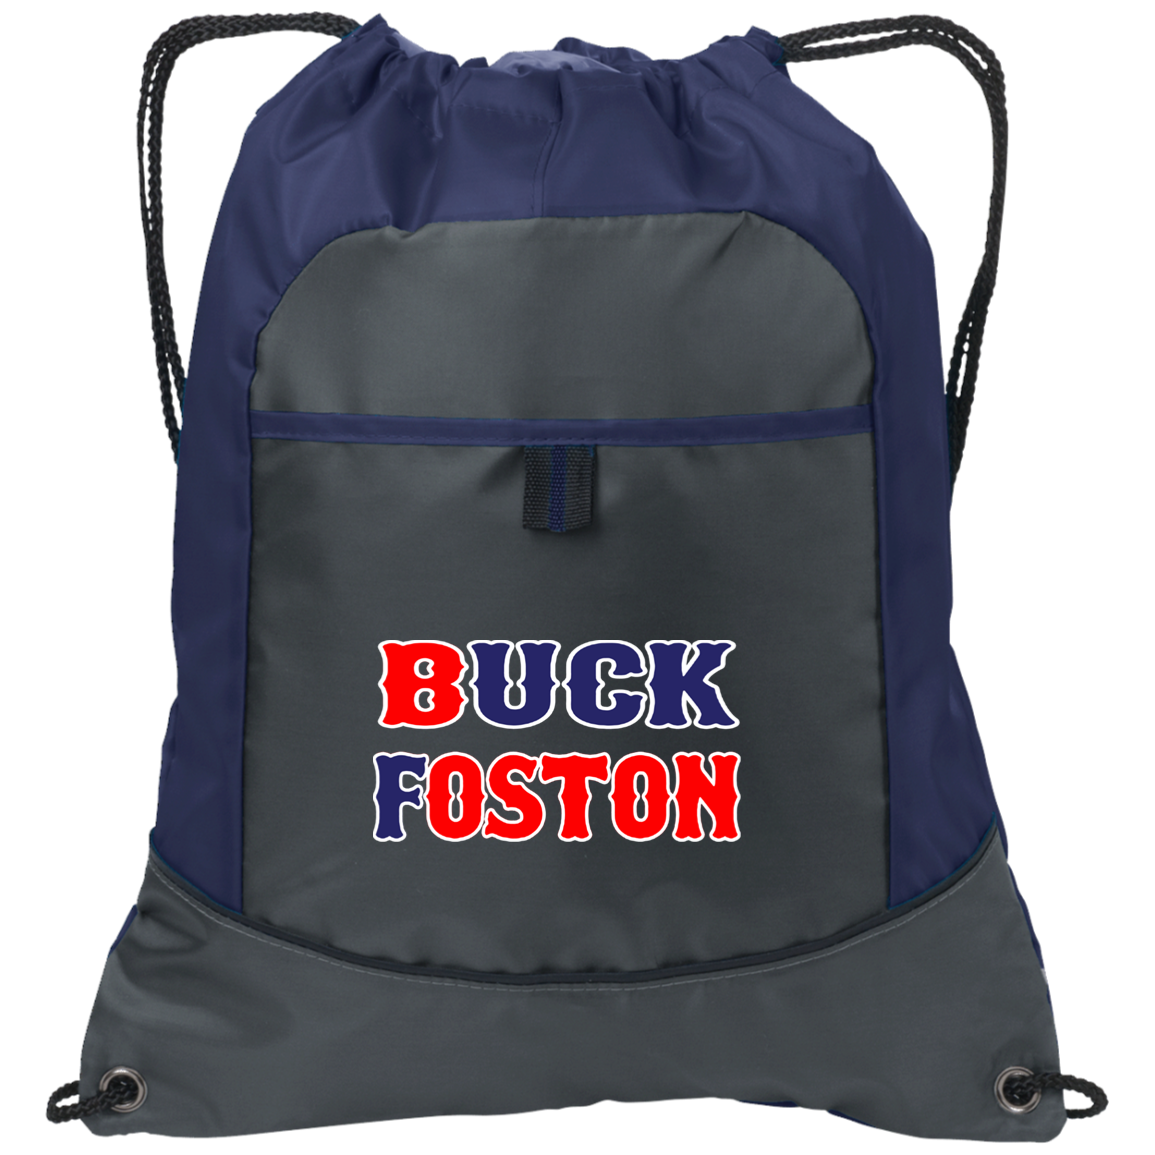 ArtichokeUSA Custom Design. BUCK FOSTON. Pocket Cinch Pack